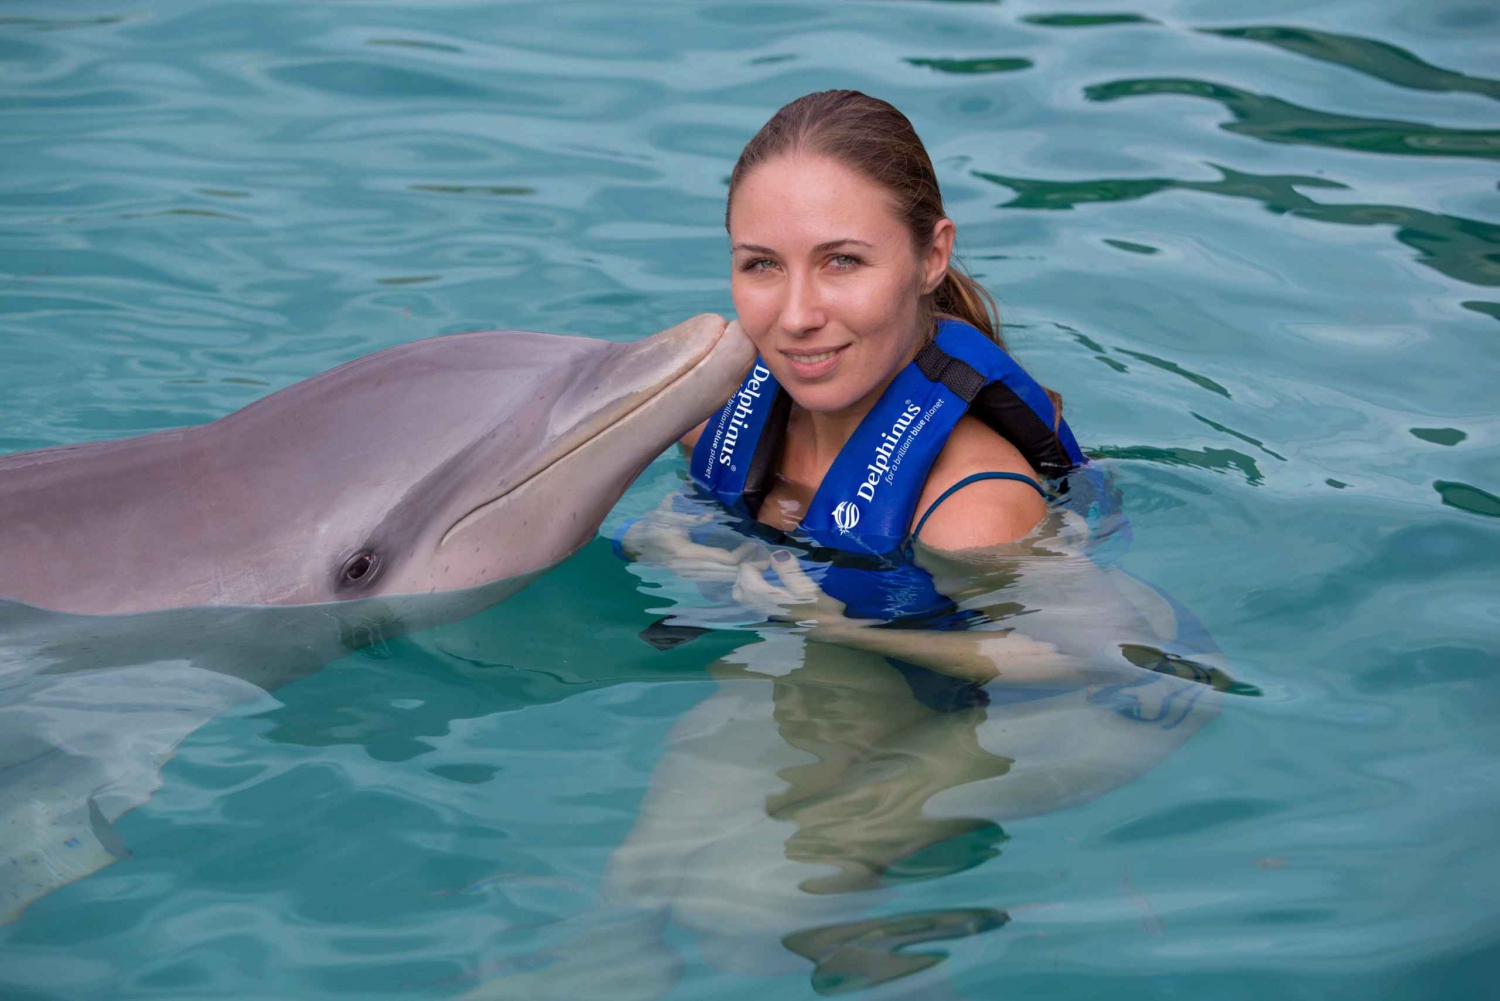 Swim with dolphins Splash - Riviera Maya